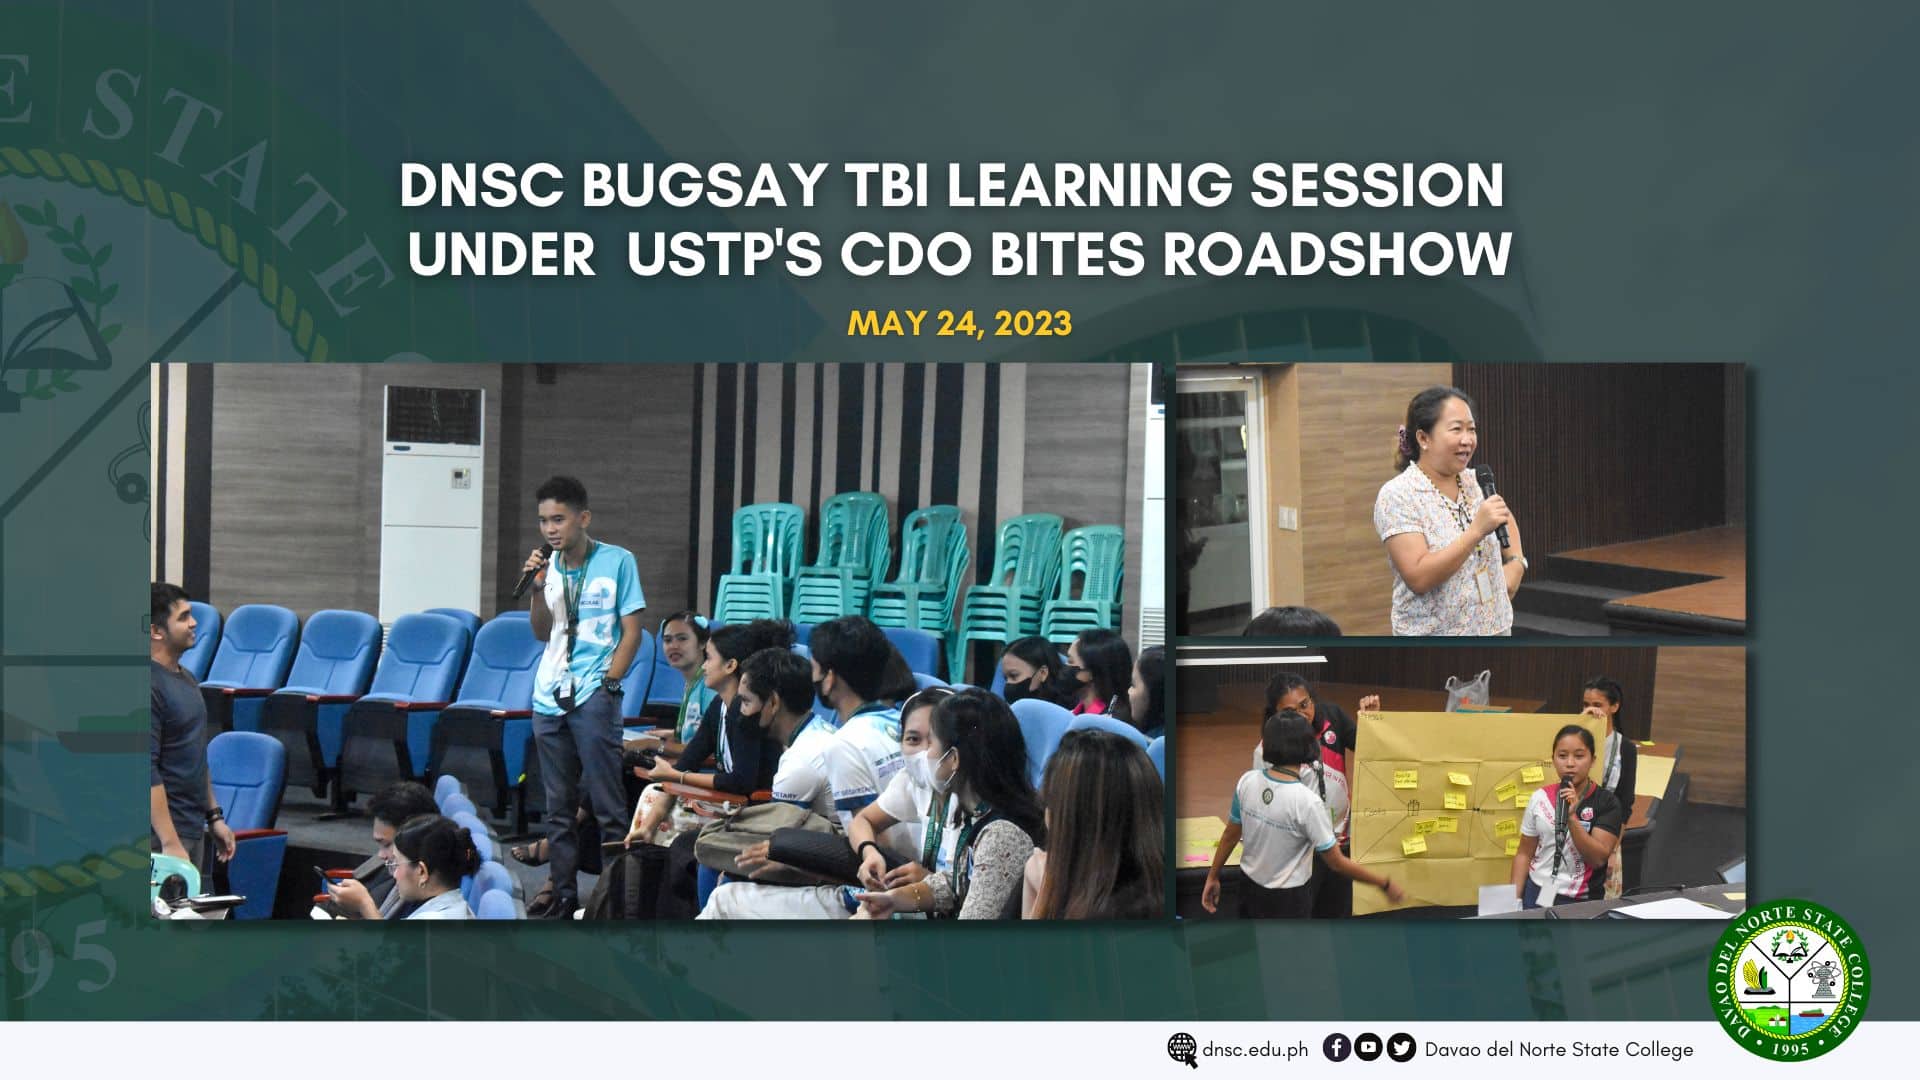 DNSC BUGSAy TBI Learning Session under USTPS CDO BITES Roadshow